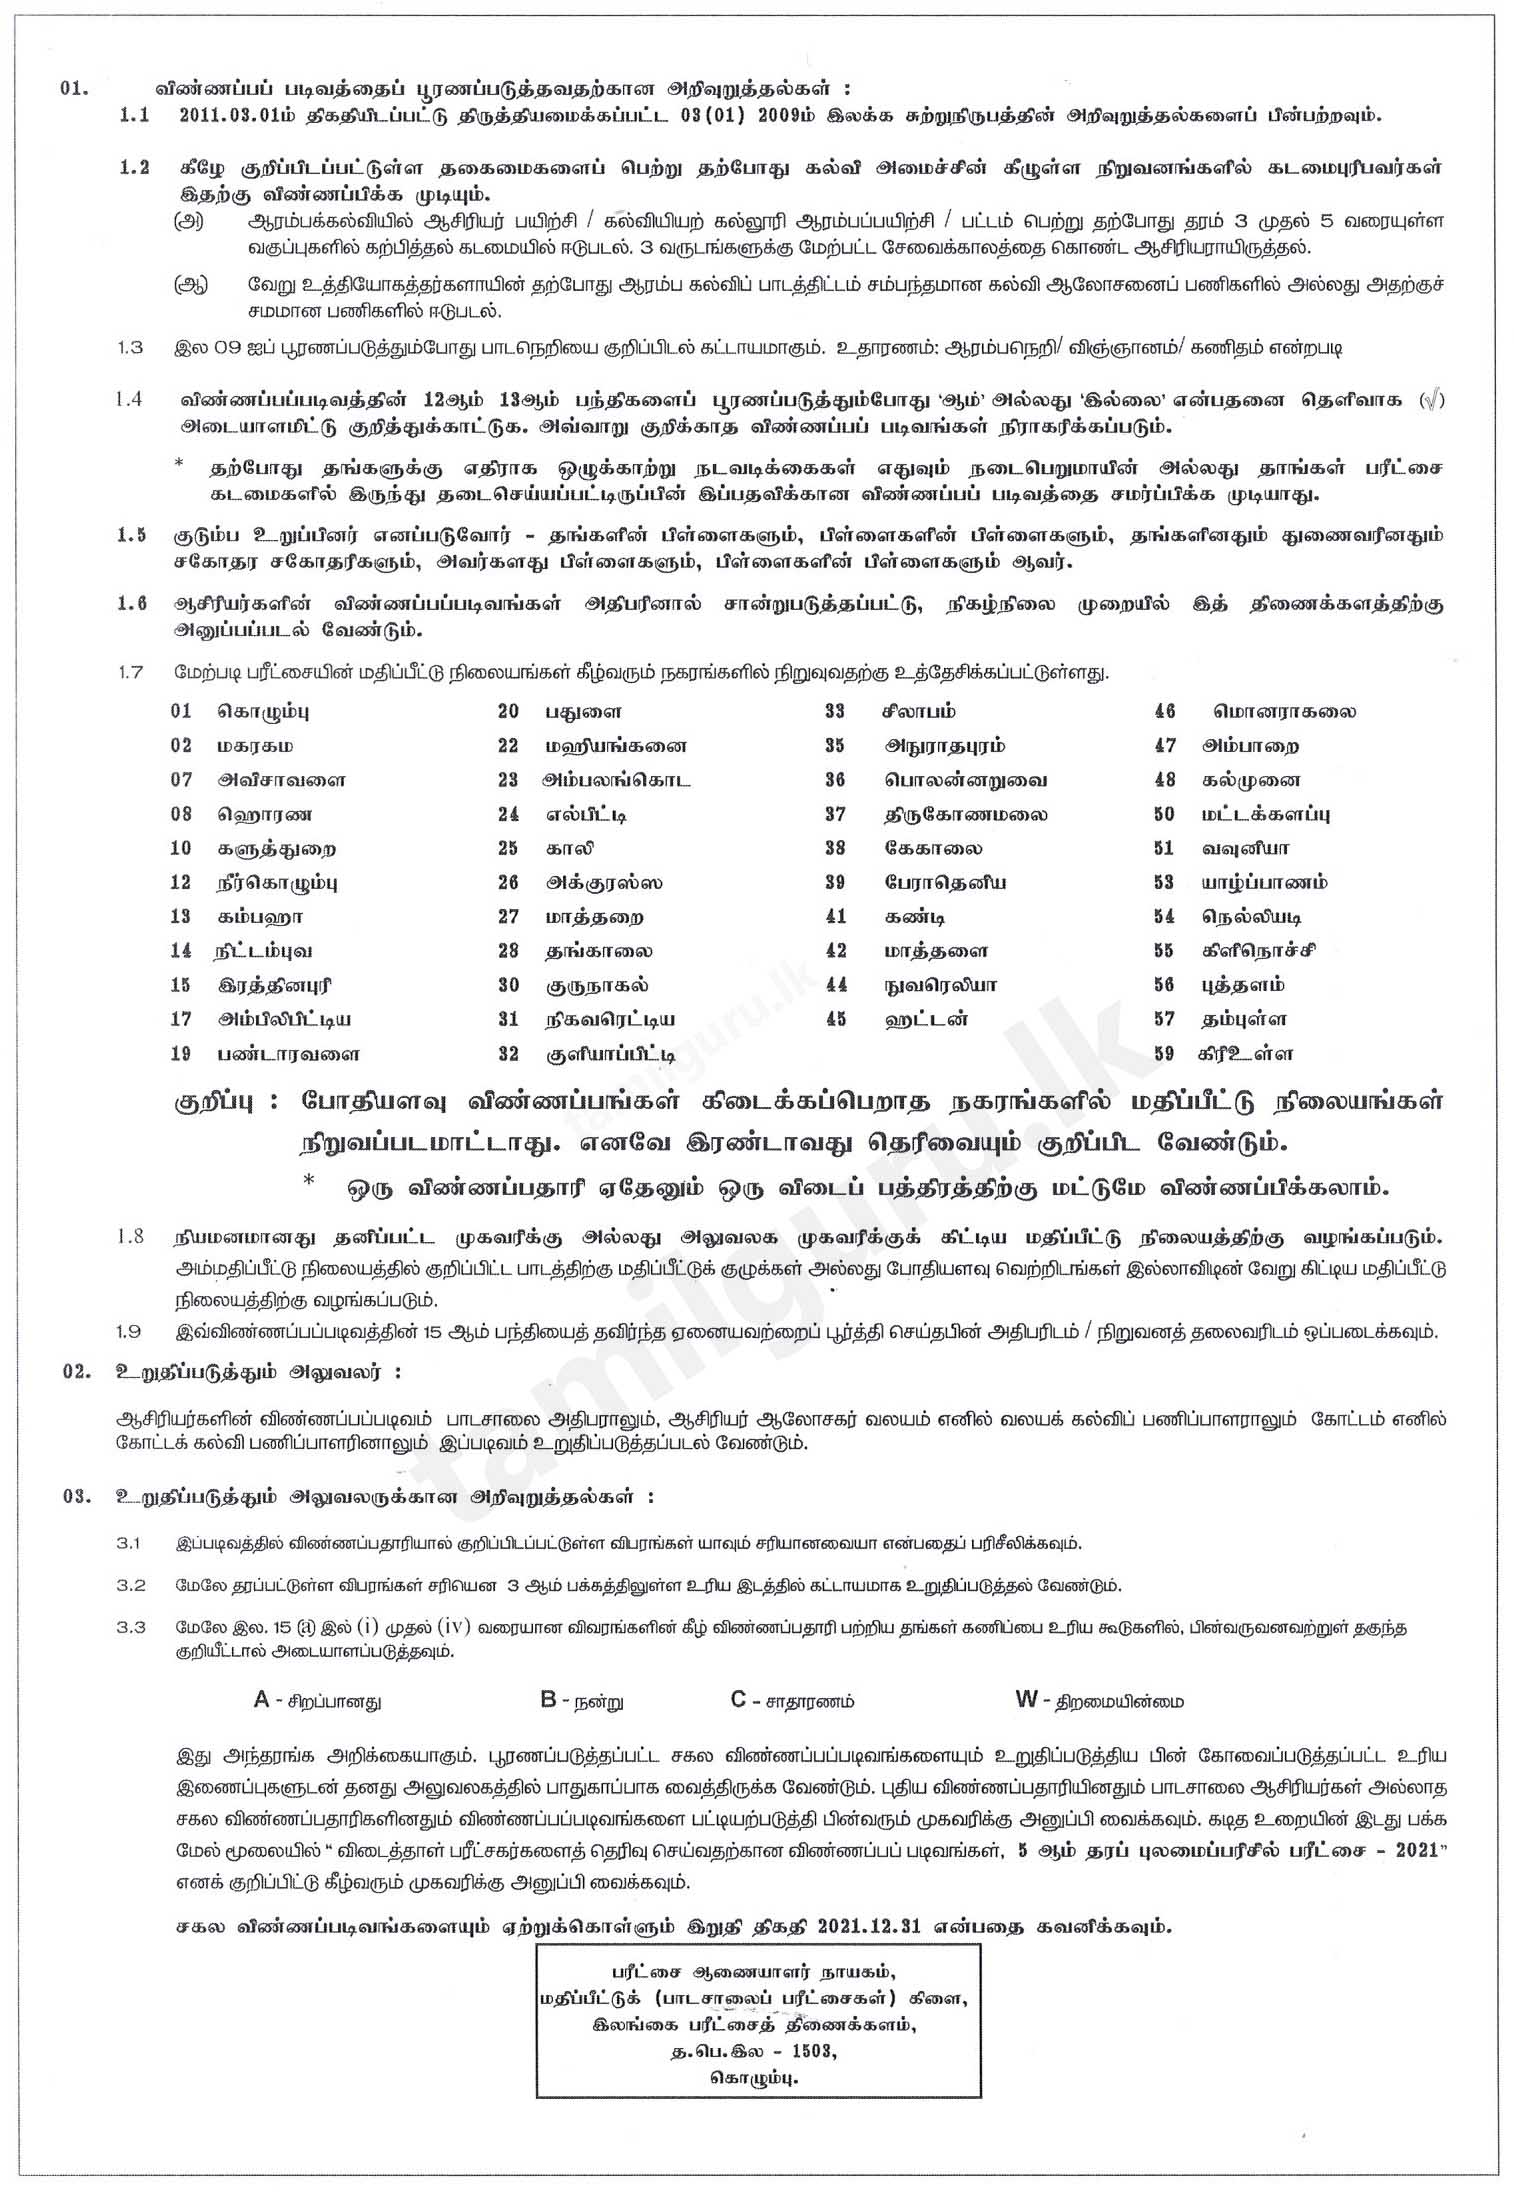 Grade 5 Scholarship Exam Paper Marking Application 2023 - Details in Tamil